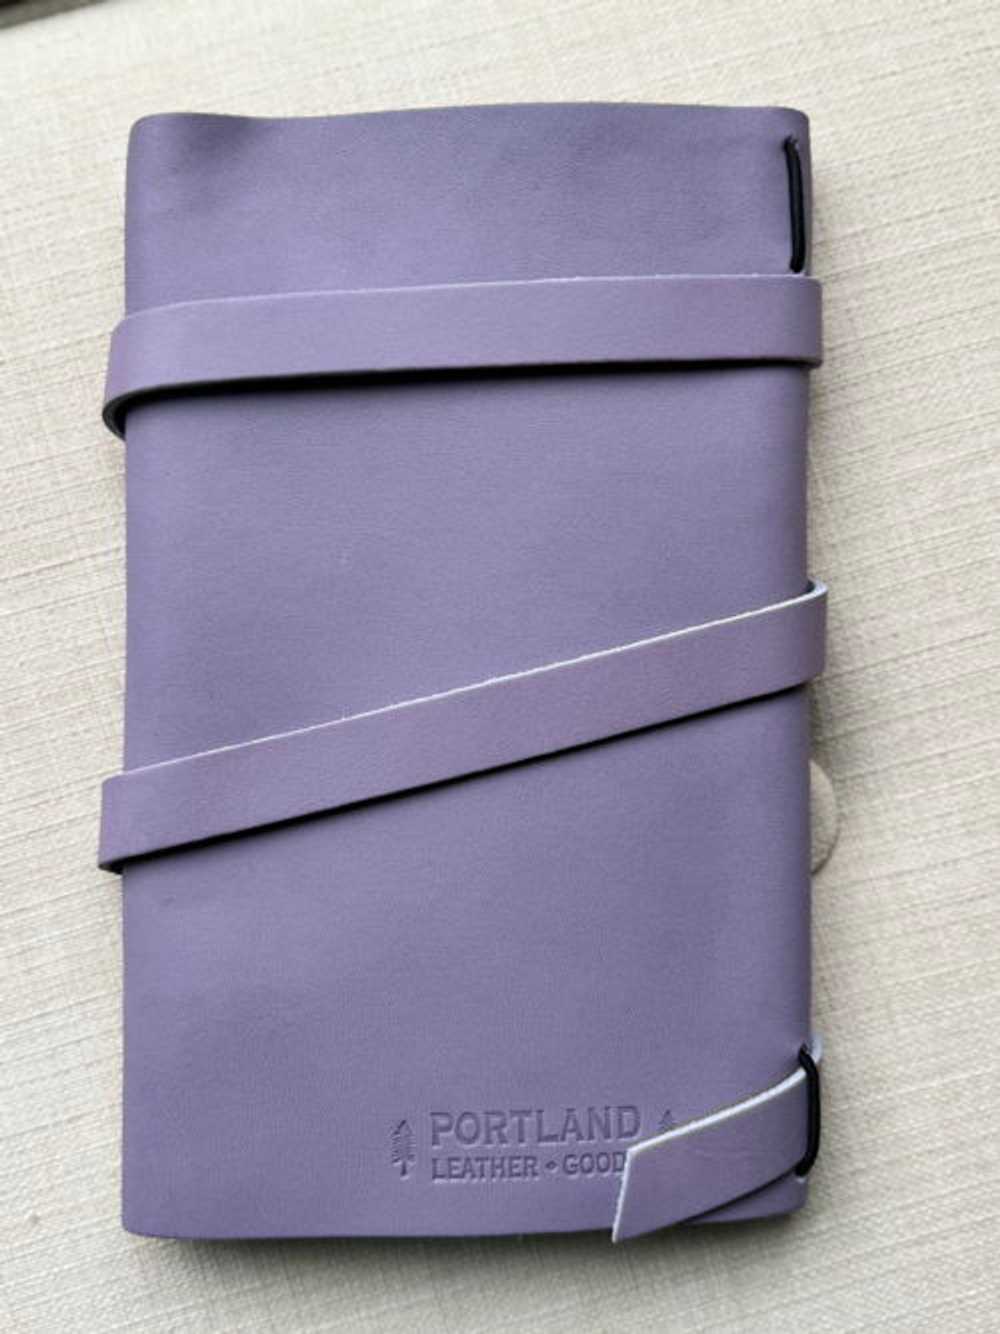 Portland Leather Medium Wrap Journal - Lavender - image 2